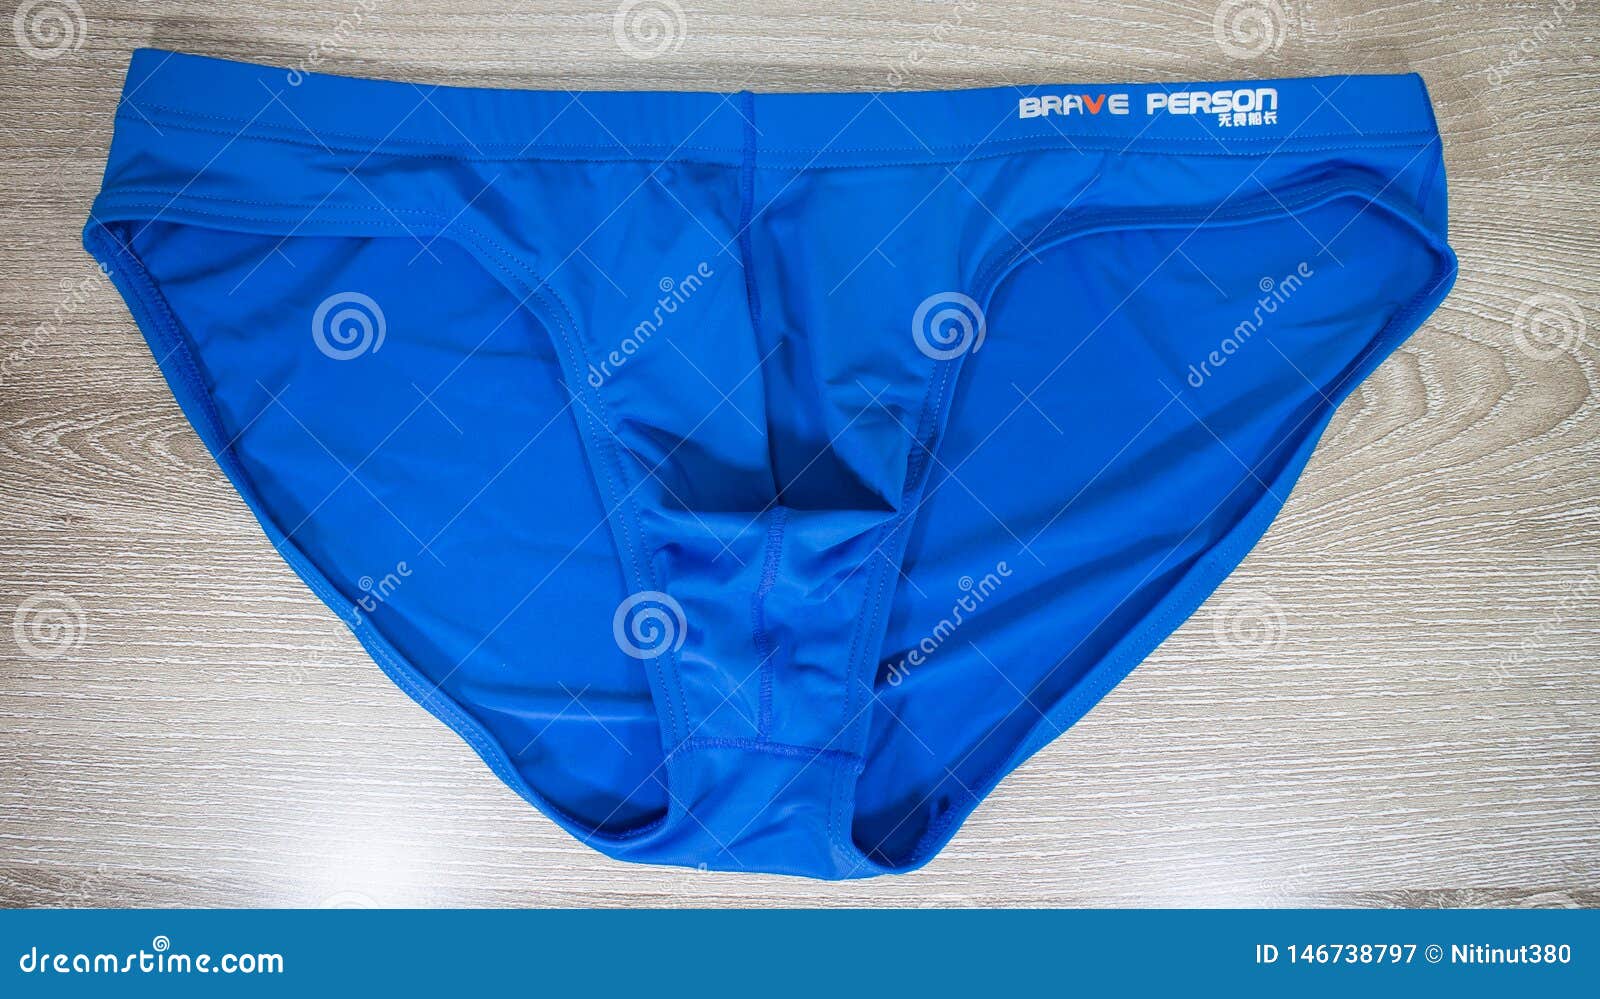 Brave Person China Brand Men Underwear Editorial Photography - Image of  garment, illustrative: 146738797